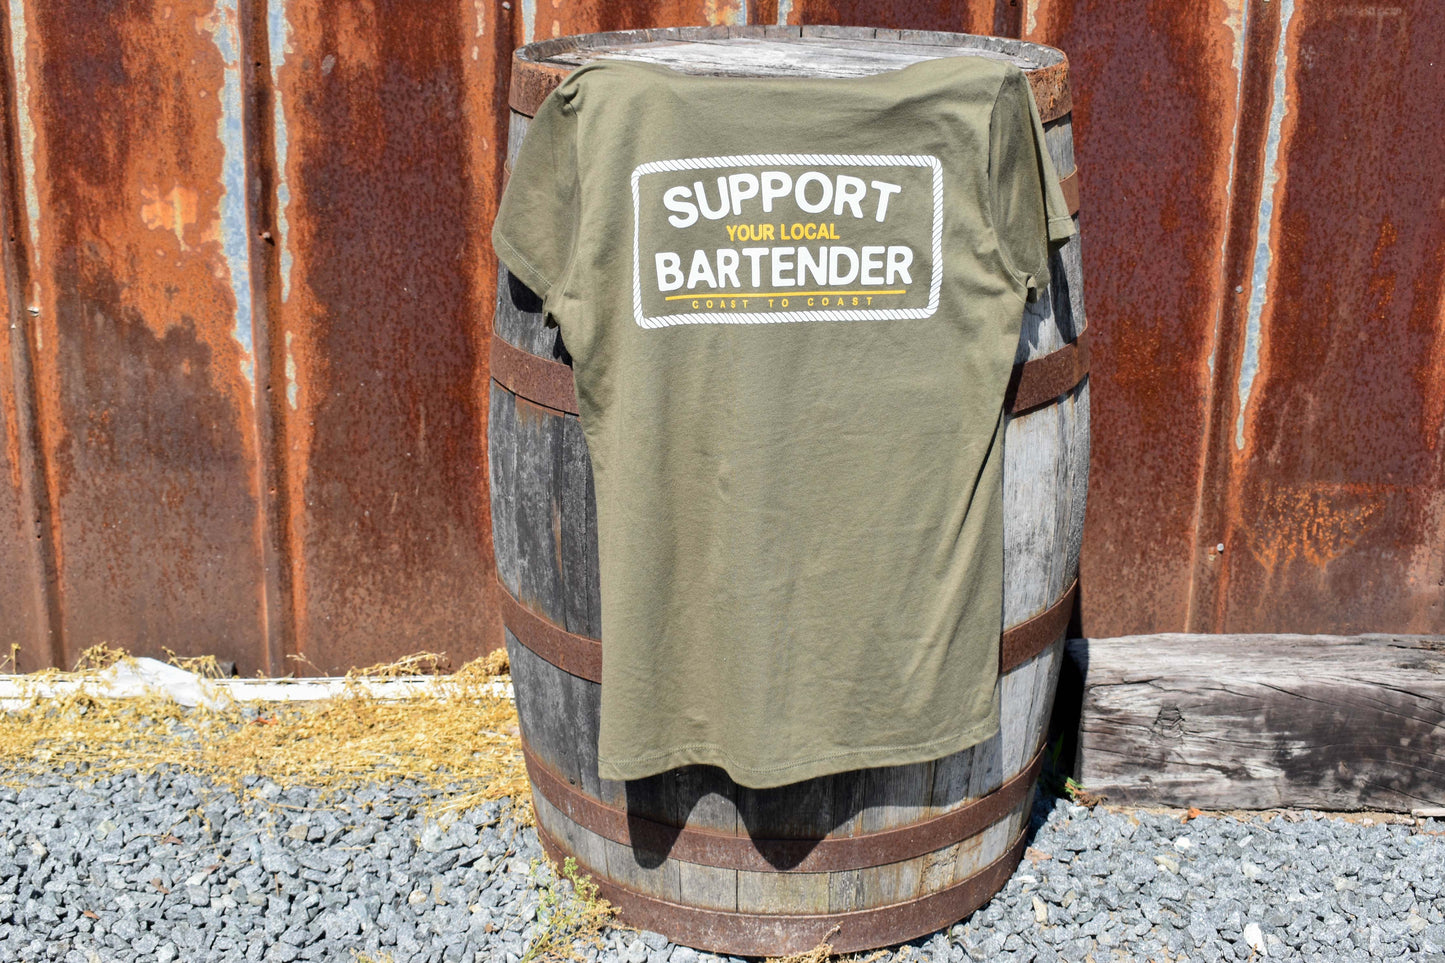 Burley Oak Dark Seas "Support Your Local Bartender" Women's T-Shirt